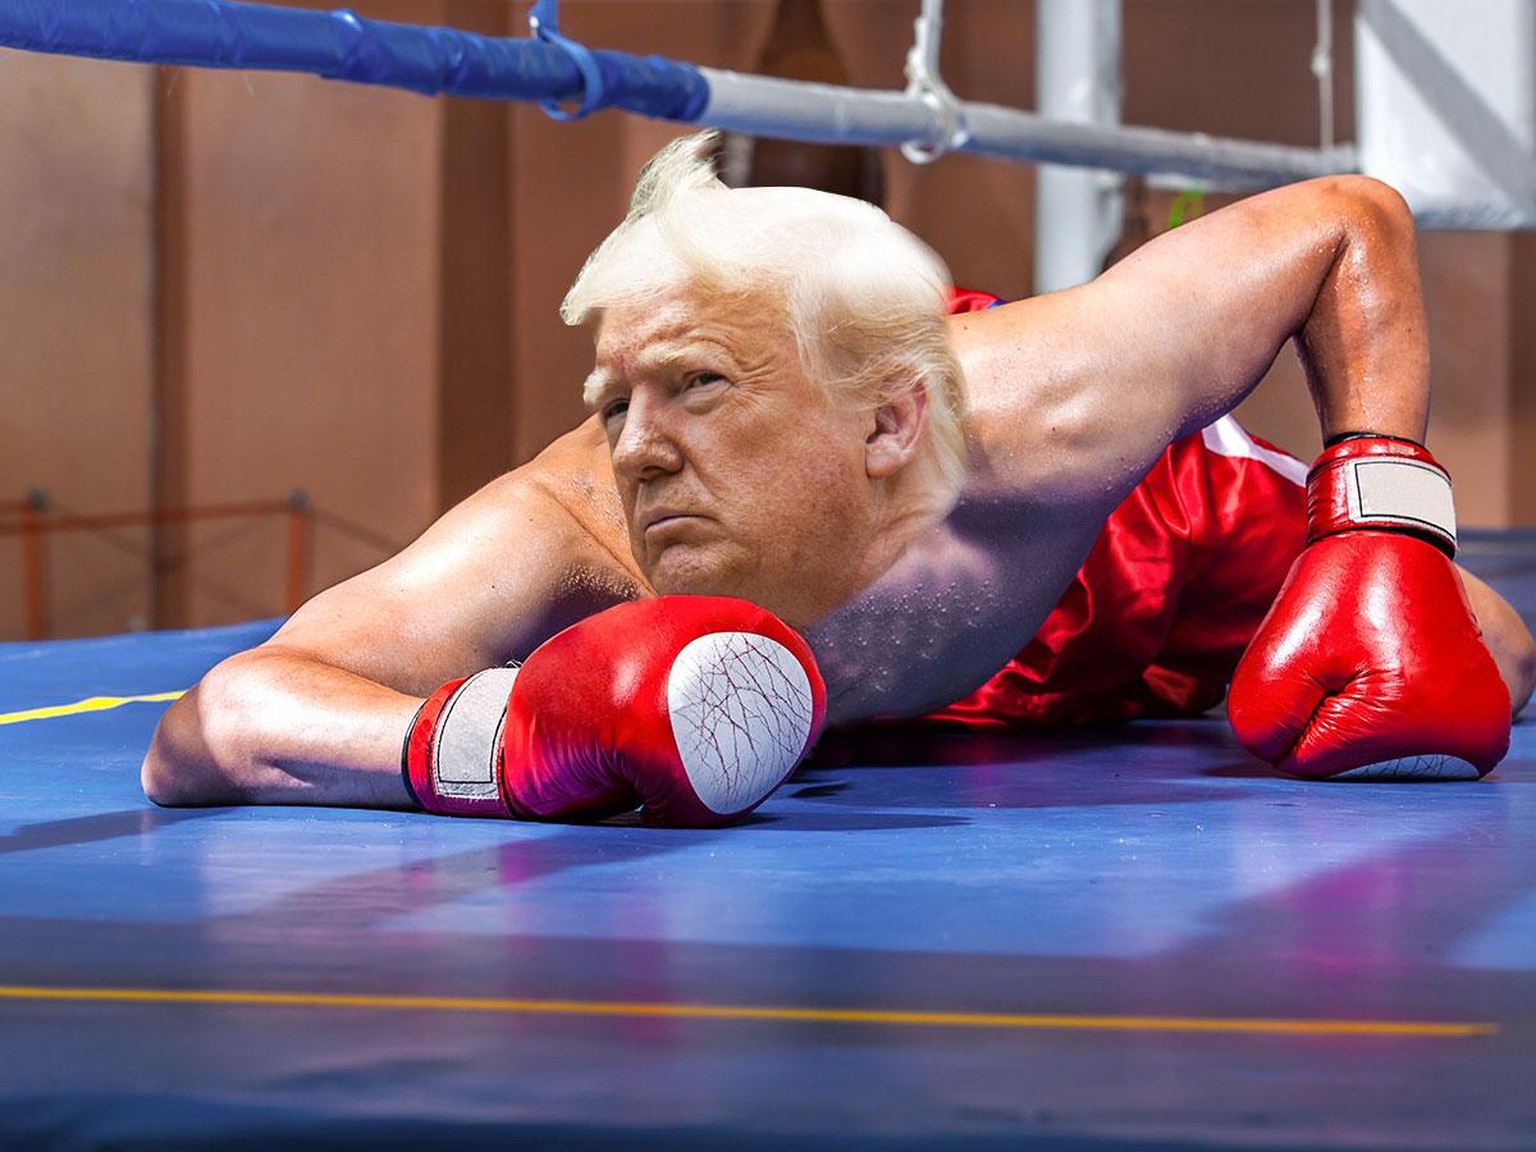 Boxer Trump